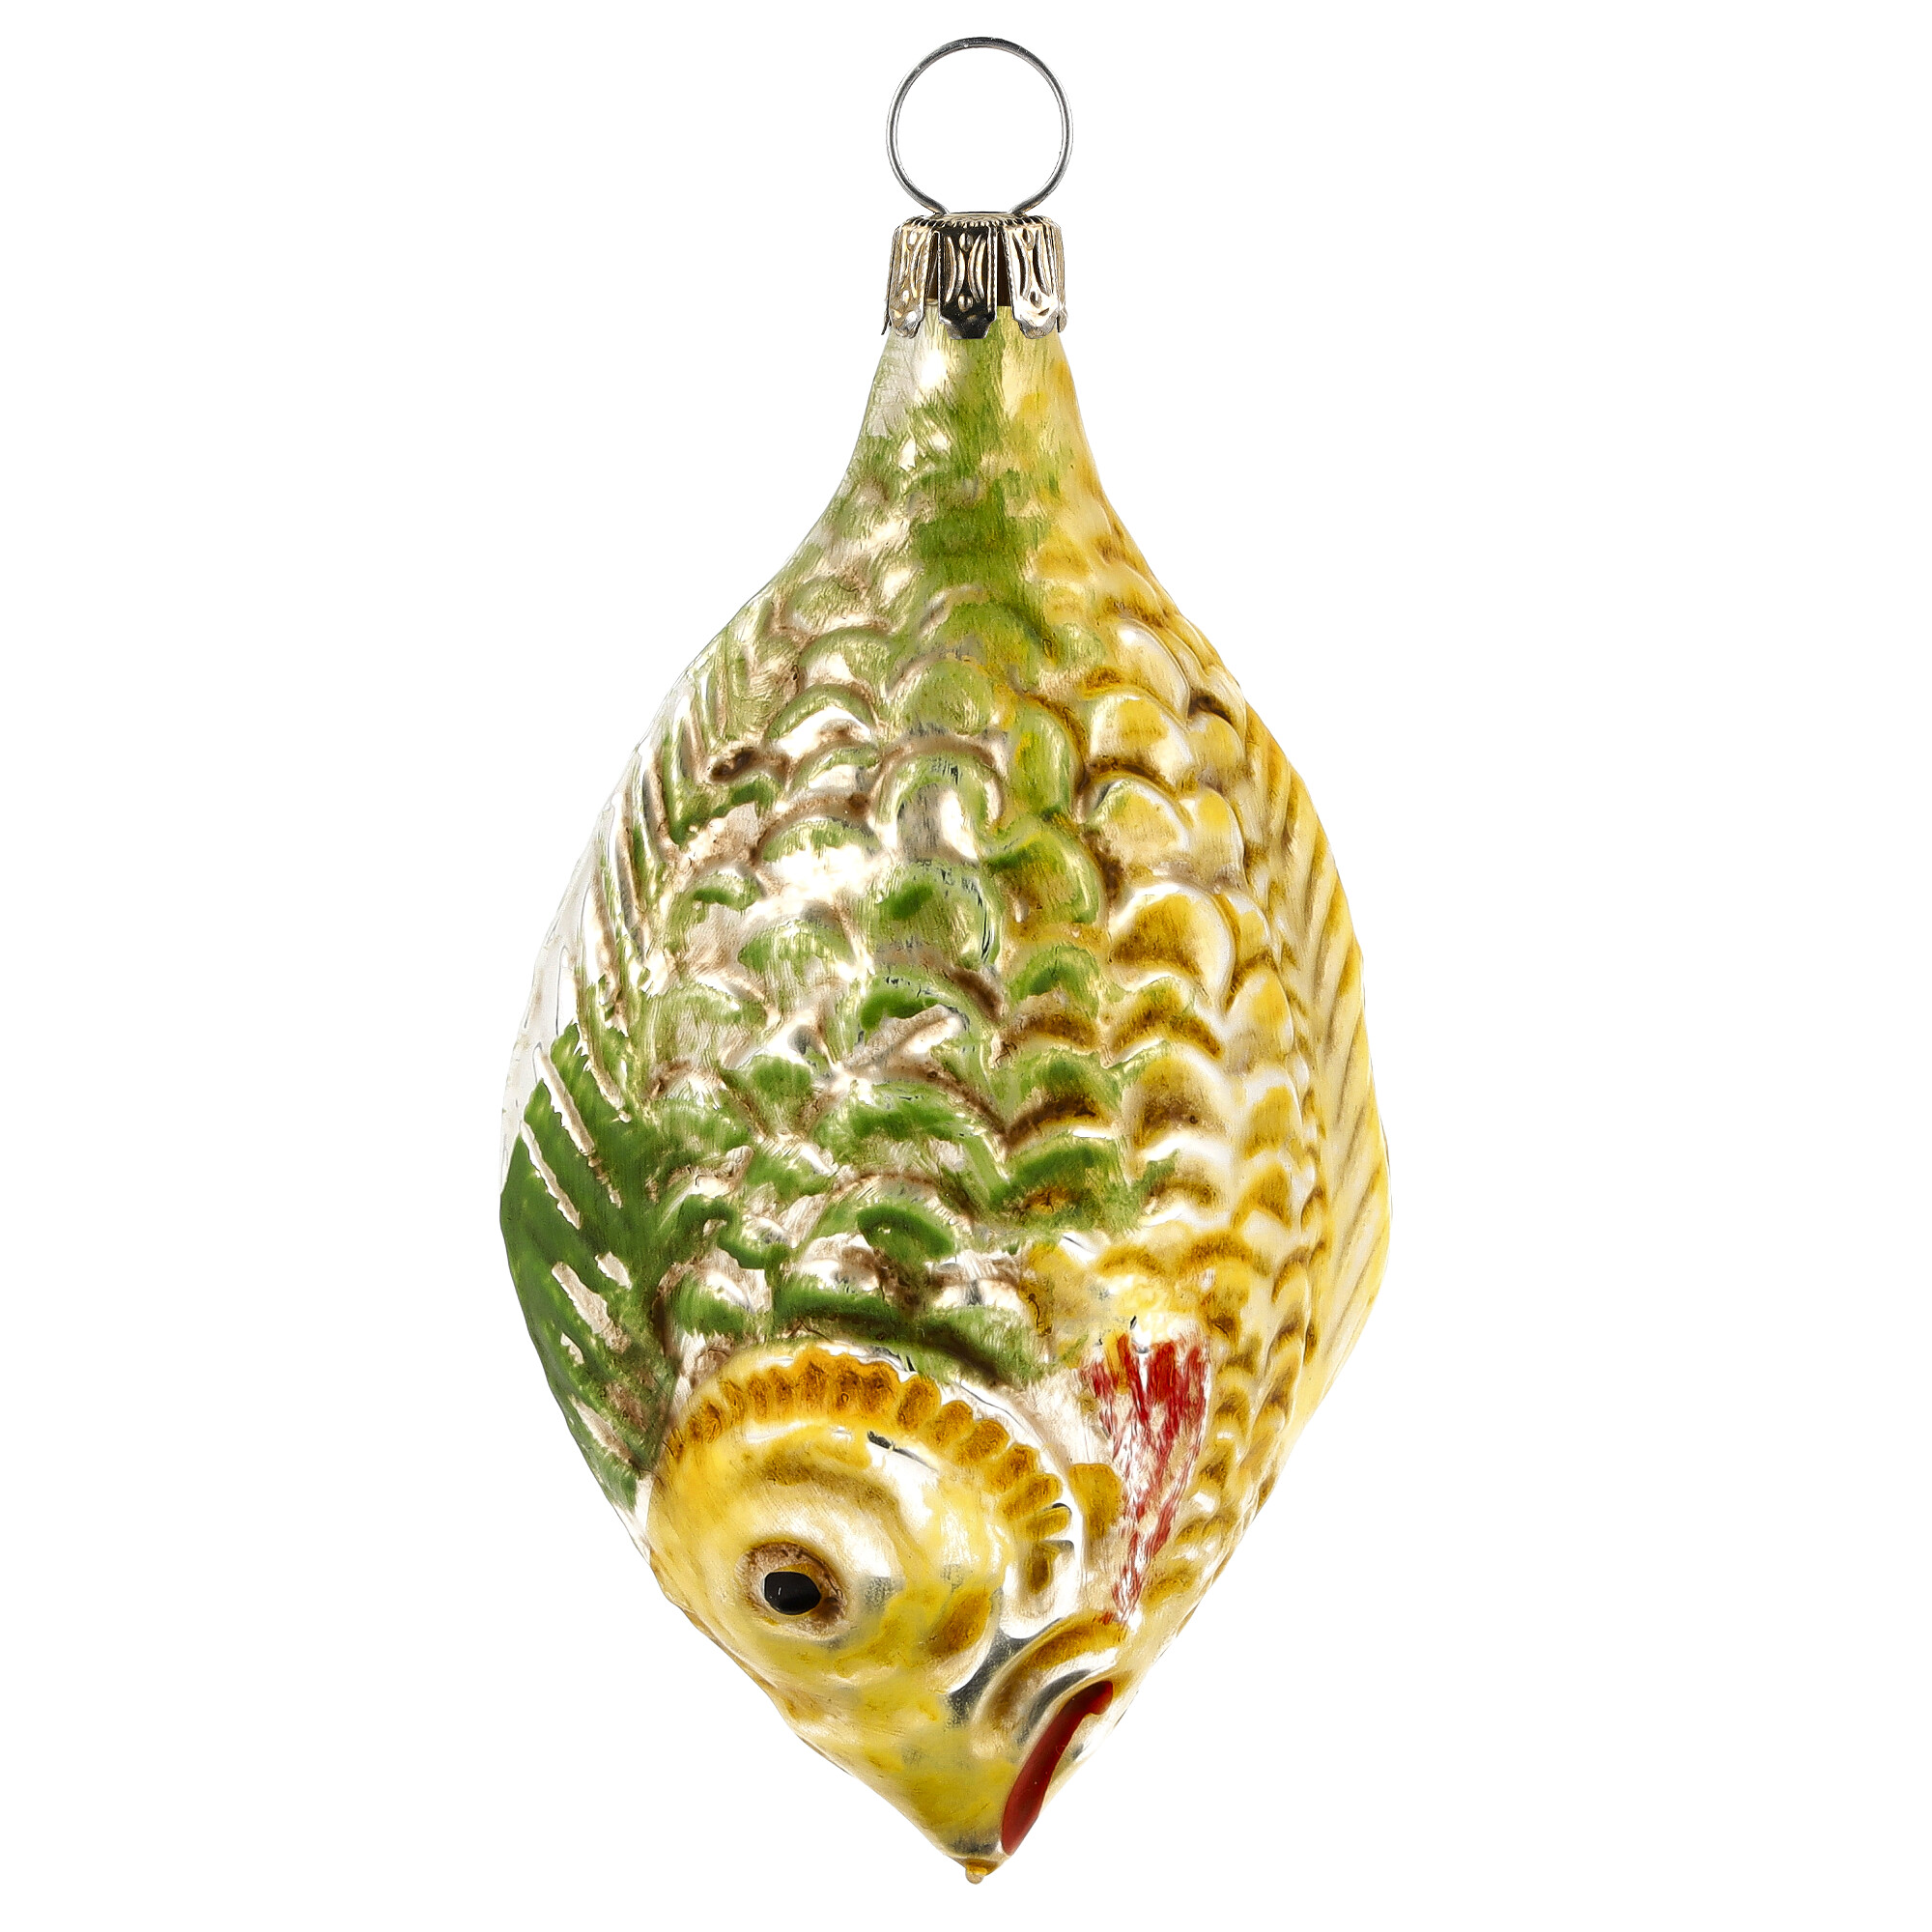 Retro Vintage style Christmas Glass Ornament - Large fish